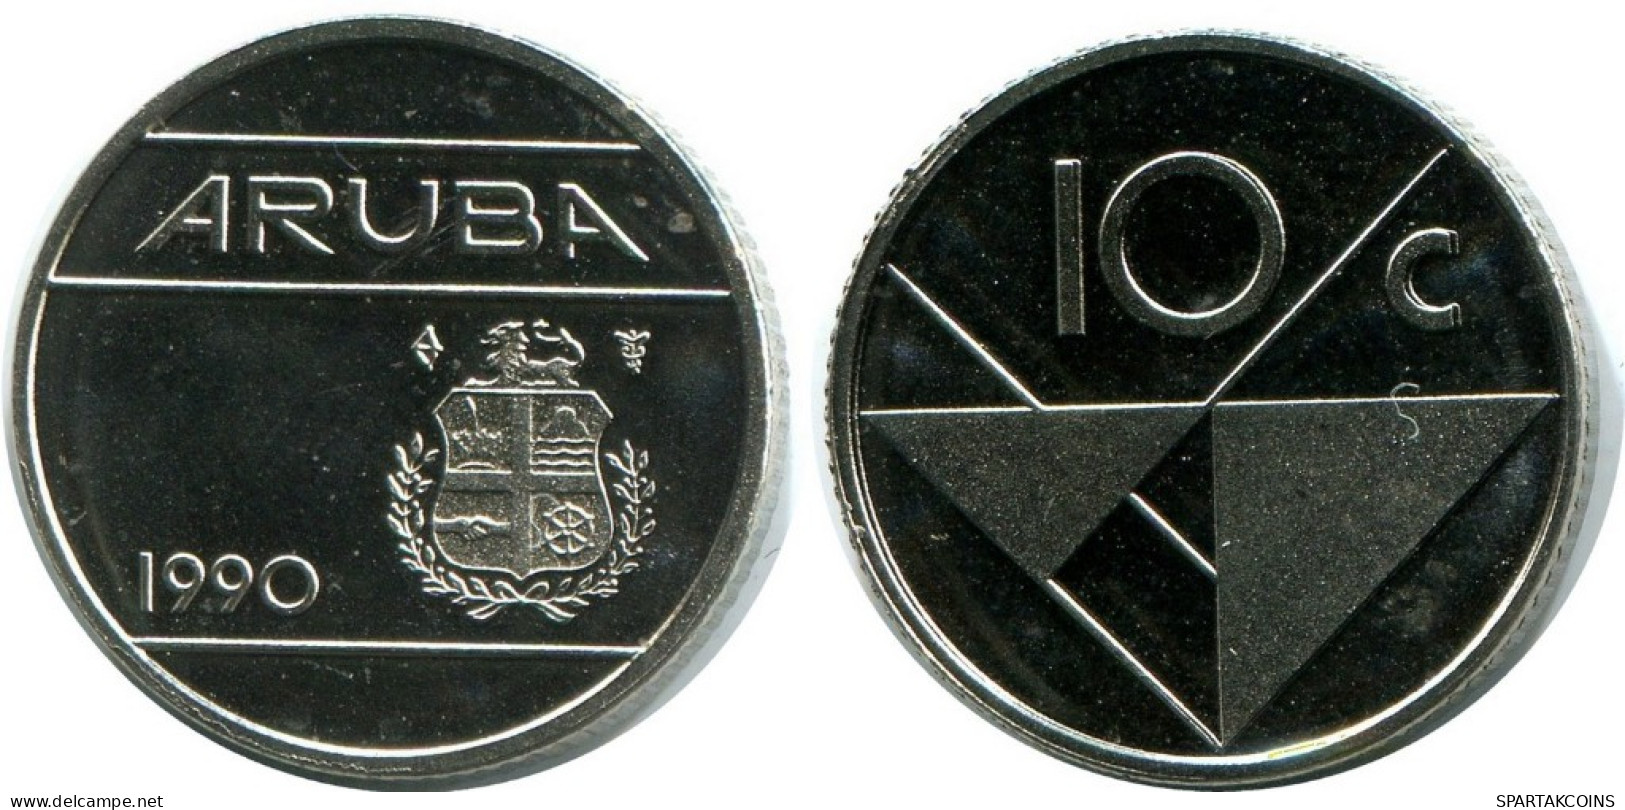 10 CENTS 1990 ARUBA Pièce (From BU Mint Set) #AH072.F.A - Aruba